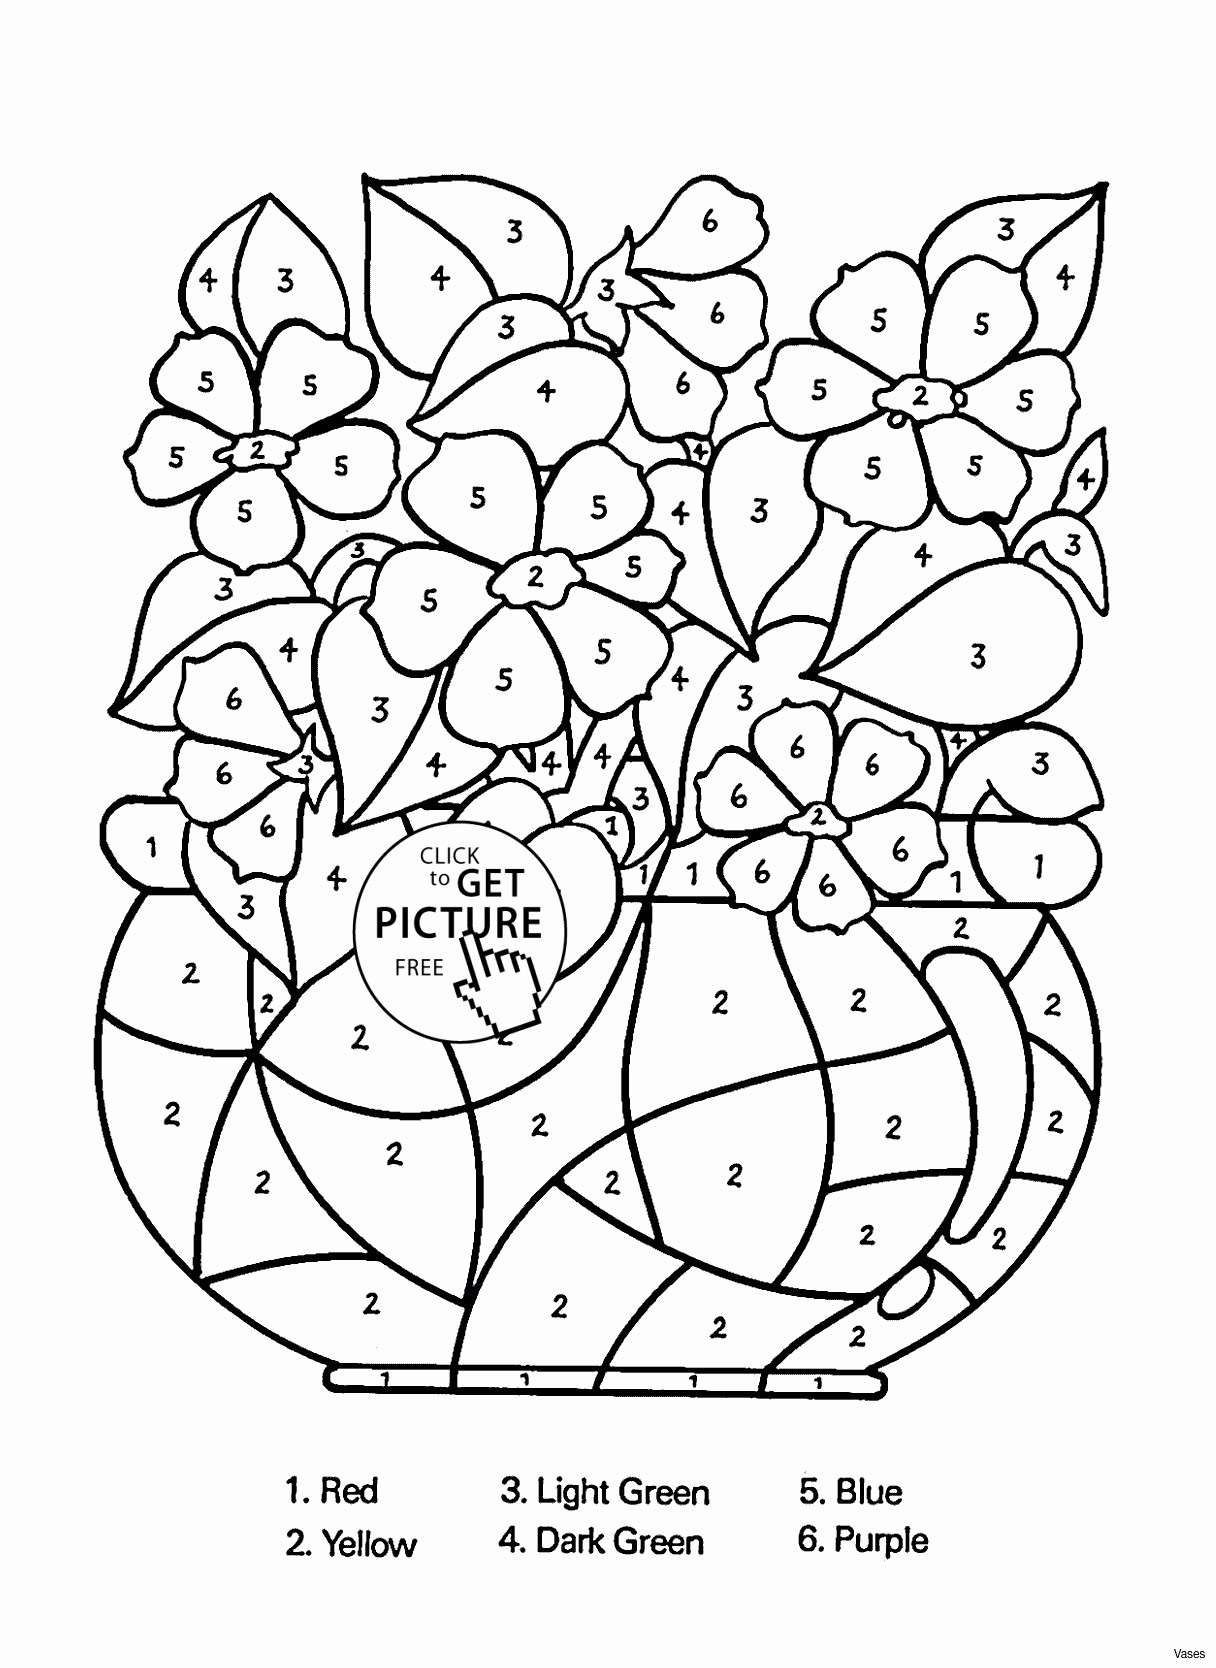 cheap glass vases by the case of white glass vase elegant vases flower vase coloring page pages intended for white glass vase elegant vases flower vase coloring page pages flowers in a top i 0d